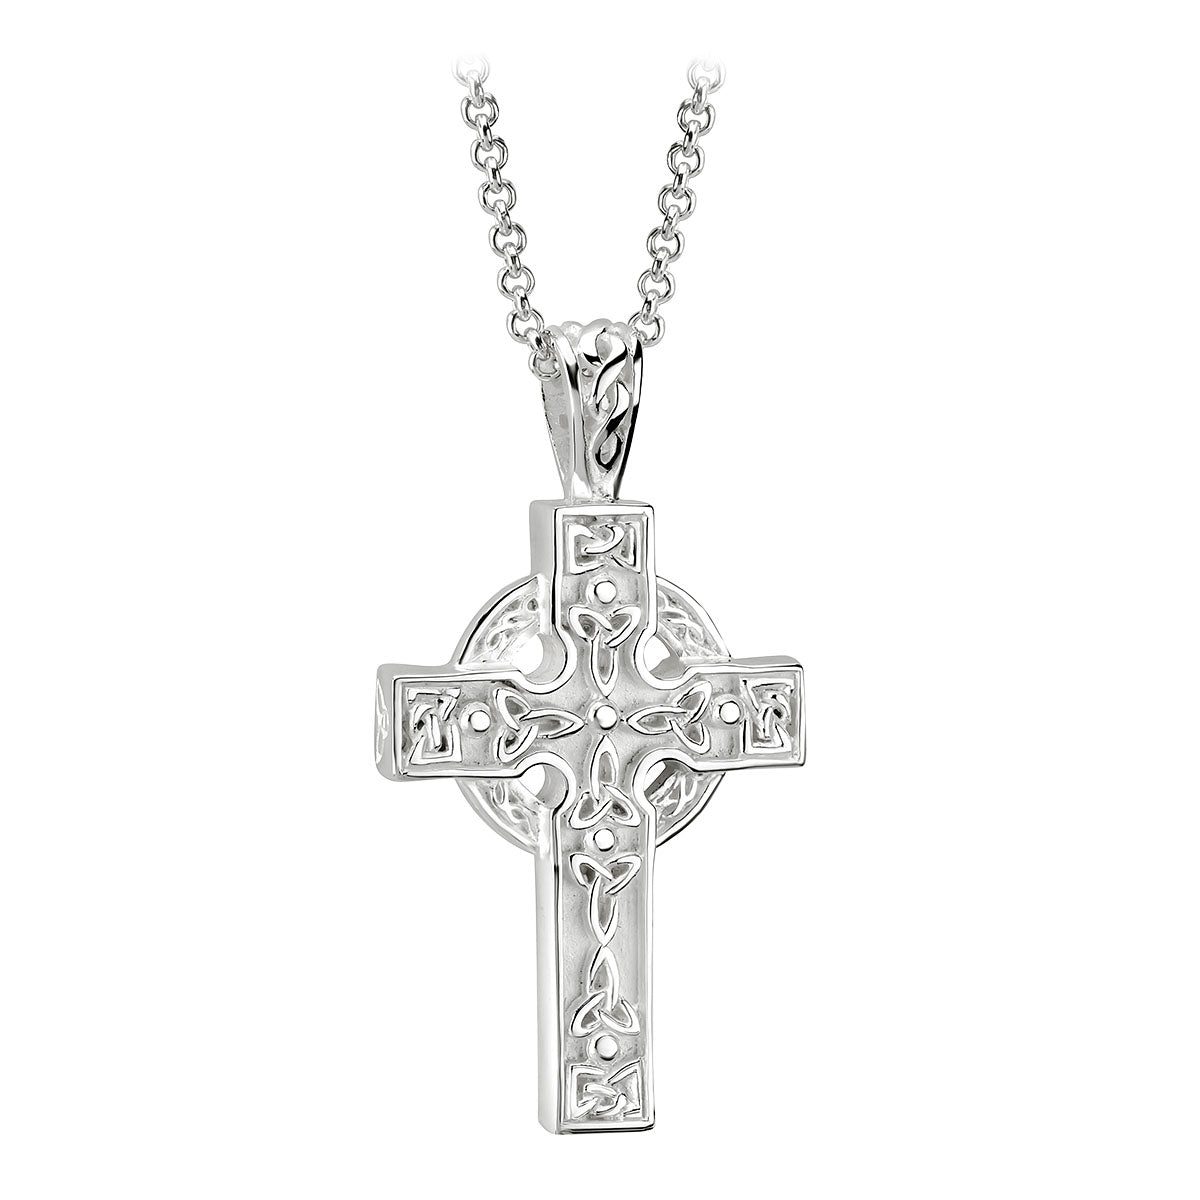 sterling silver heavy celtic cross pendant medium s4795 from Solvar